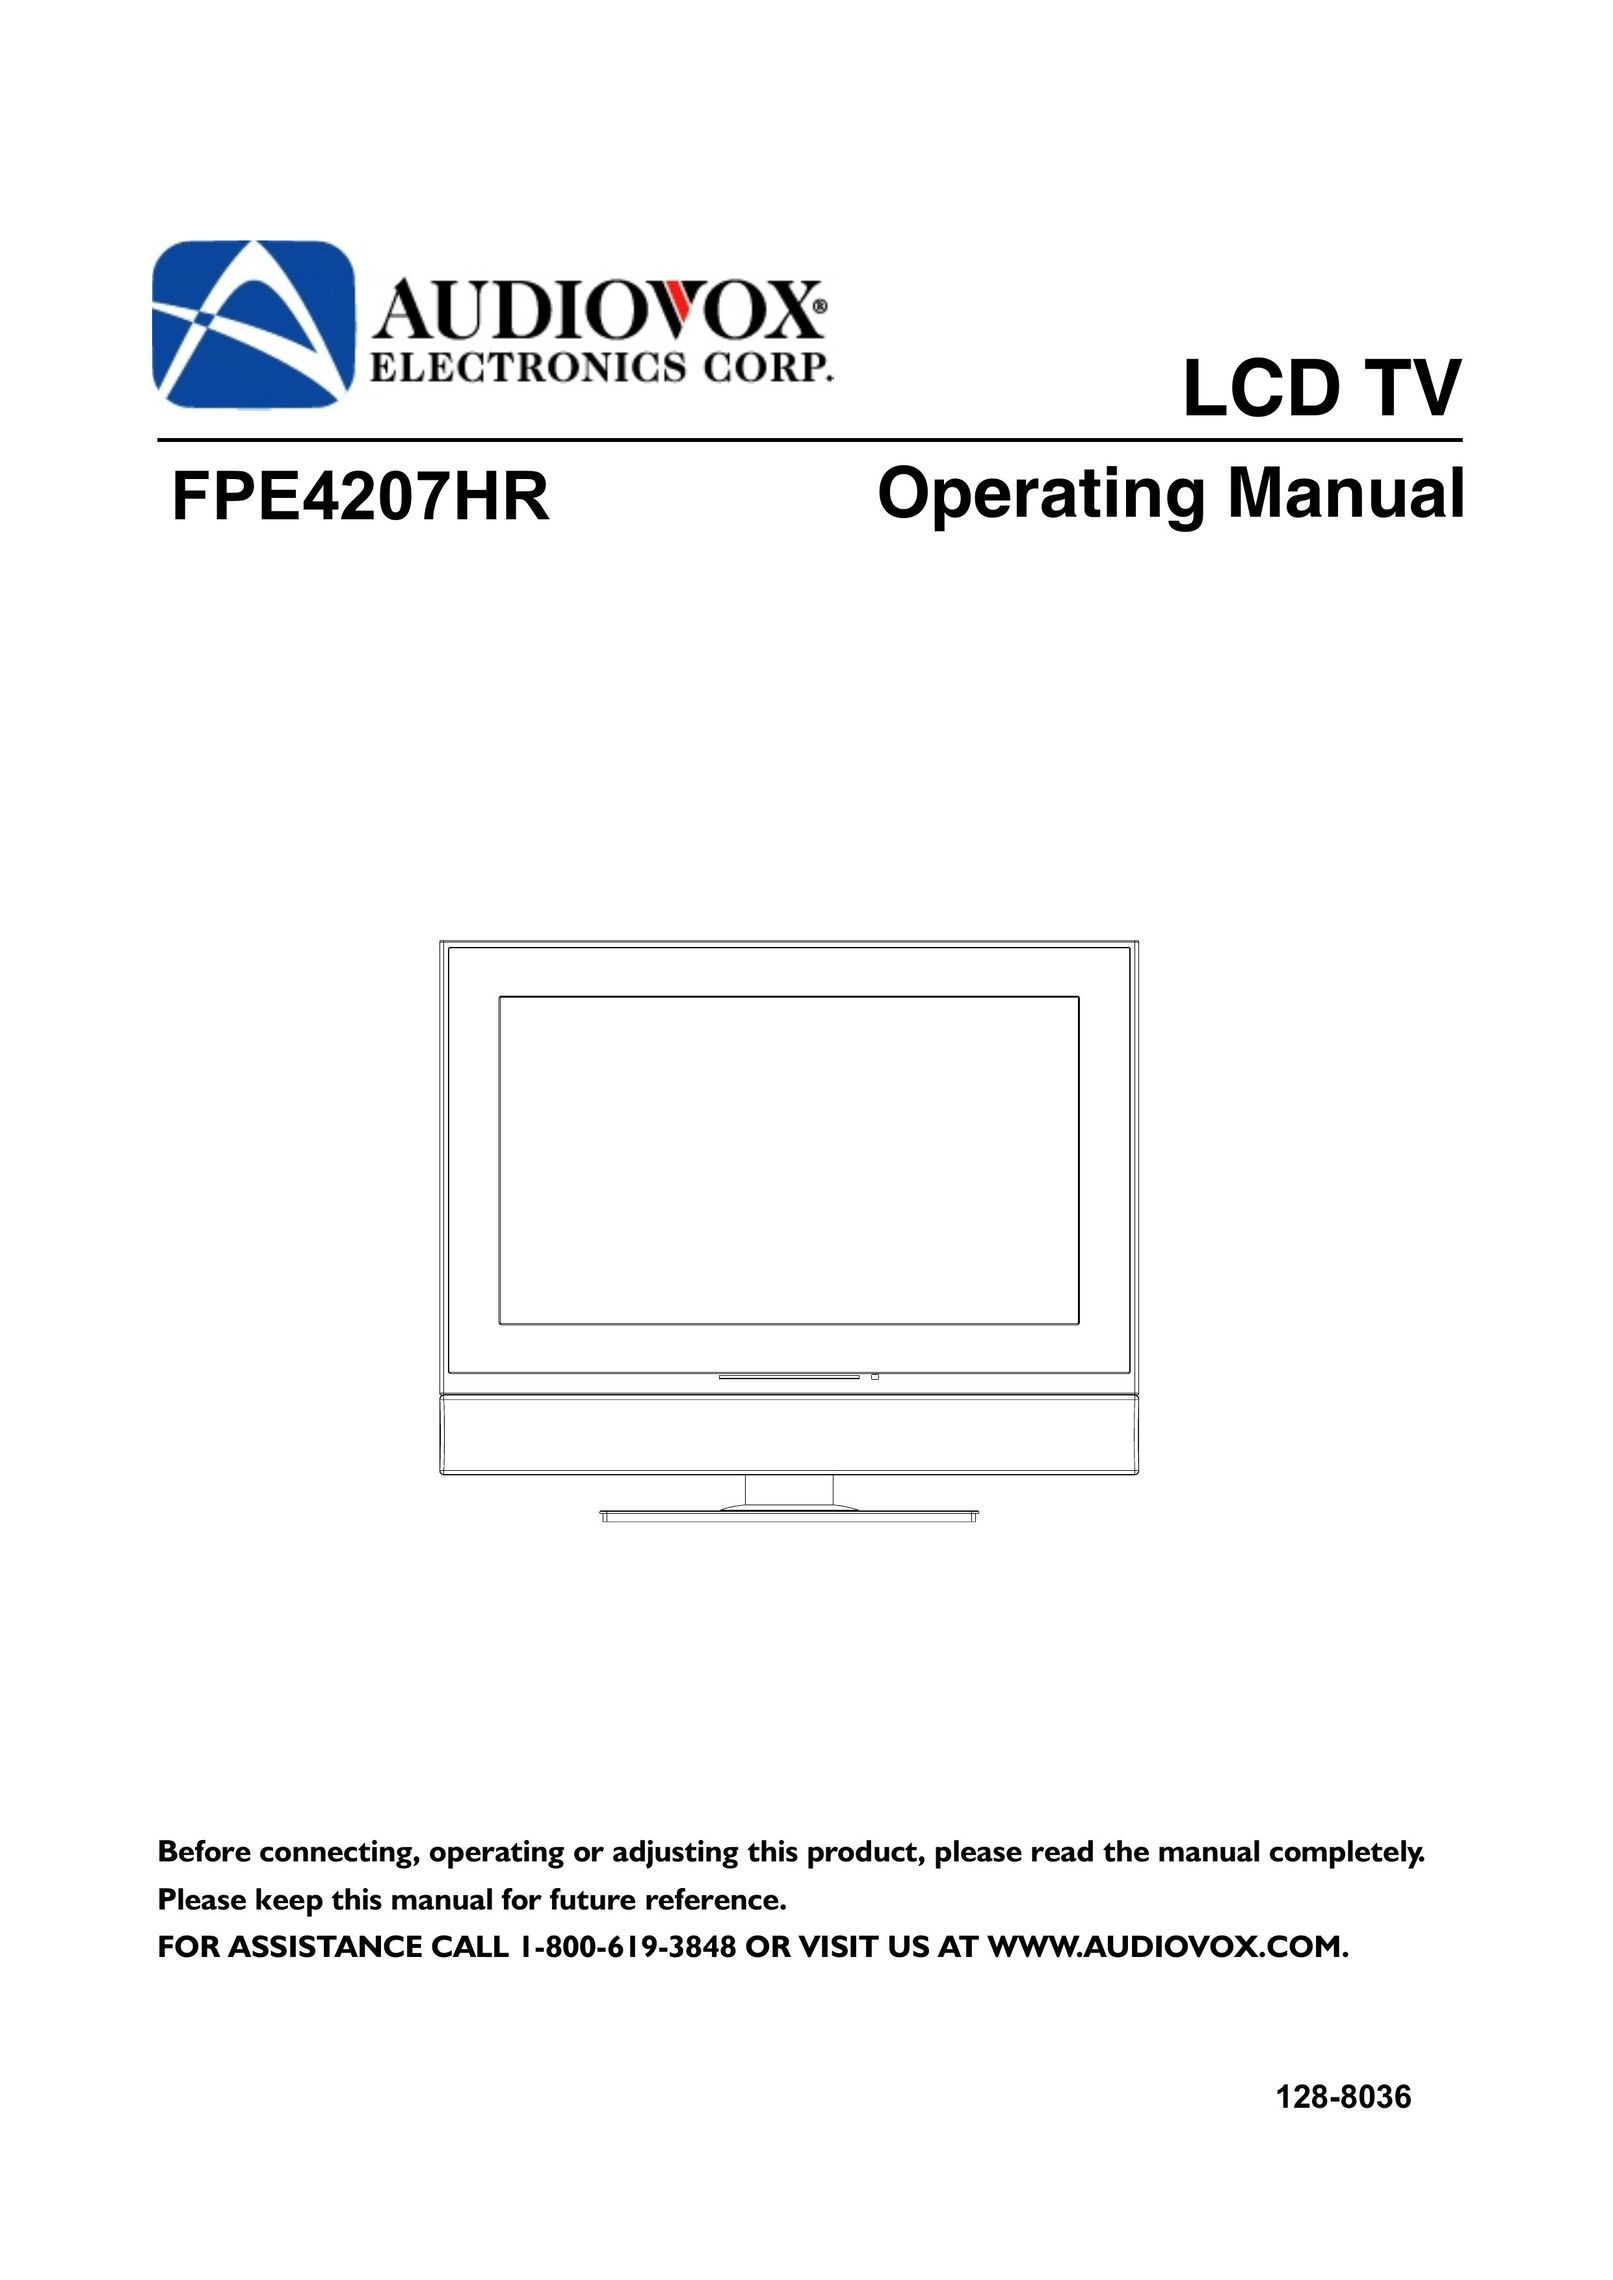 Audiovox FPE4207HR Flat Panel Television User Manual